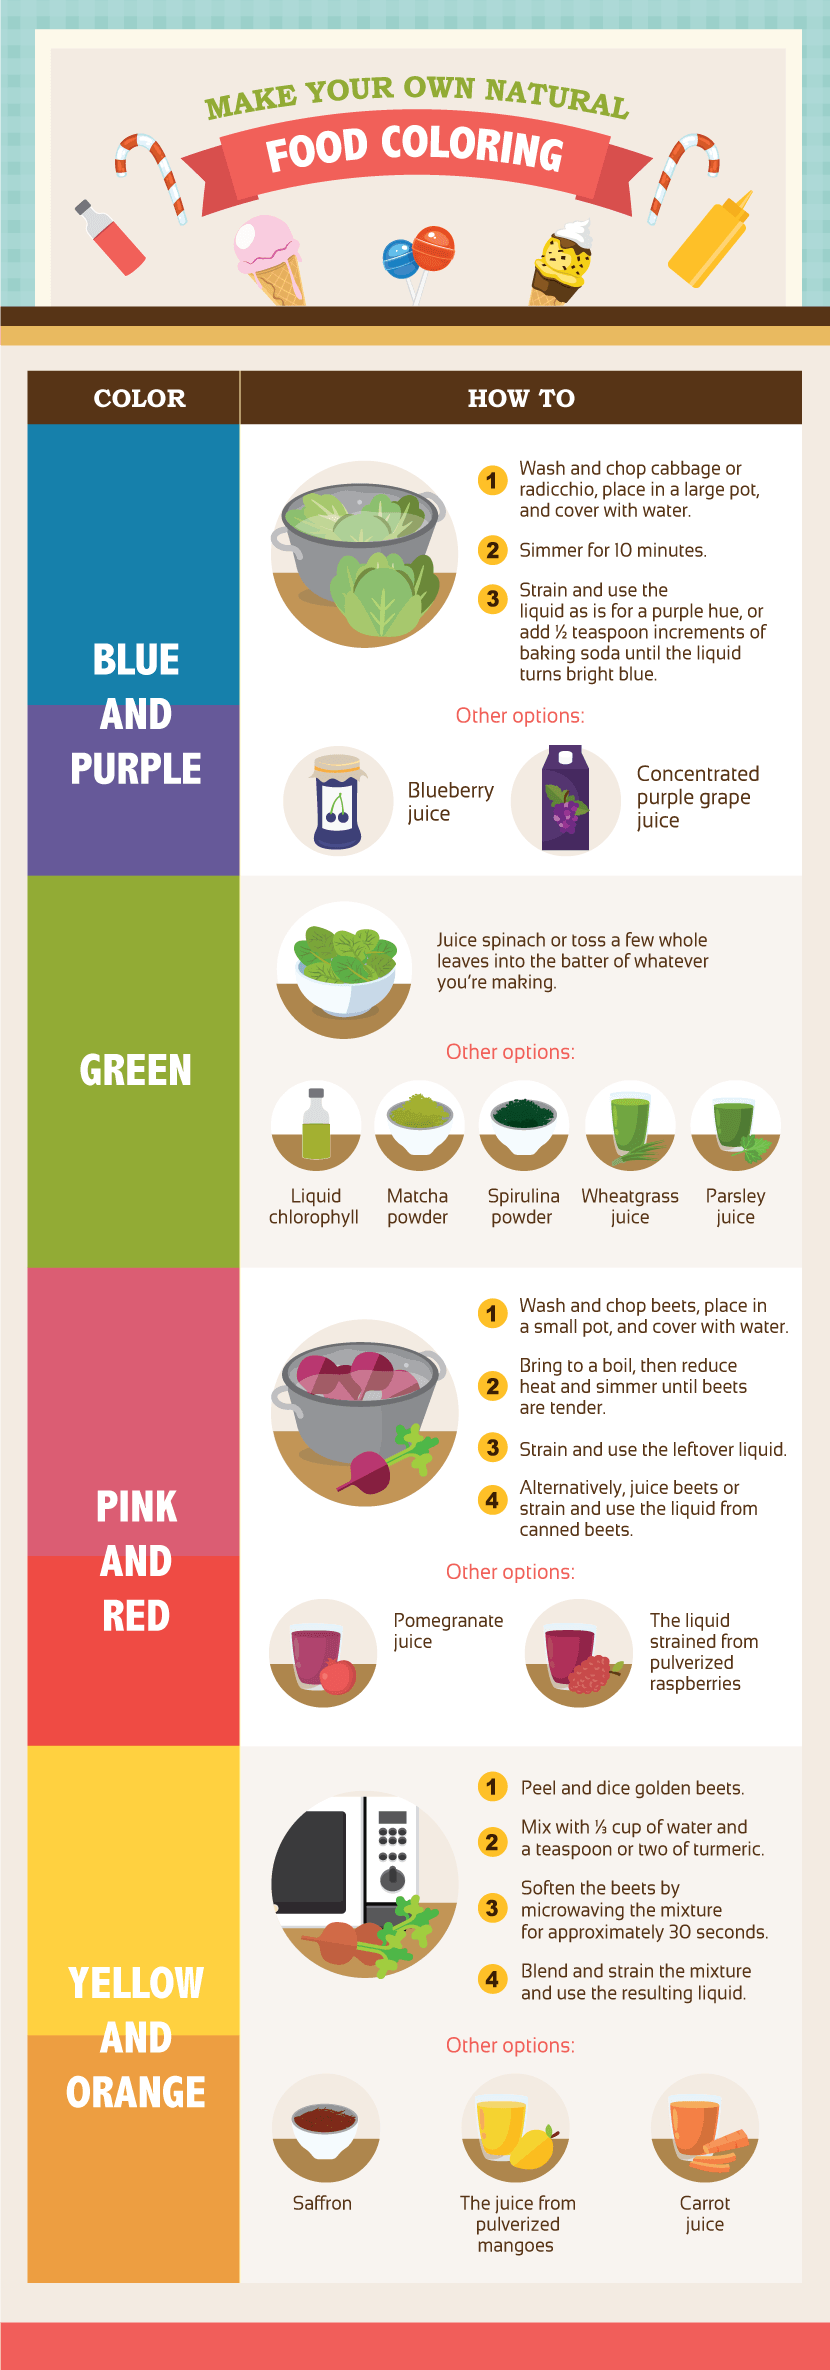 Making Safe Food Coloring at Home | Fix.com